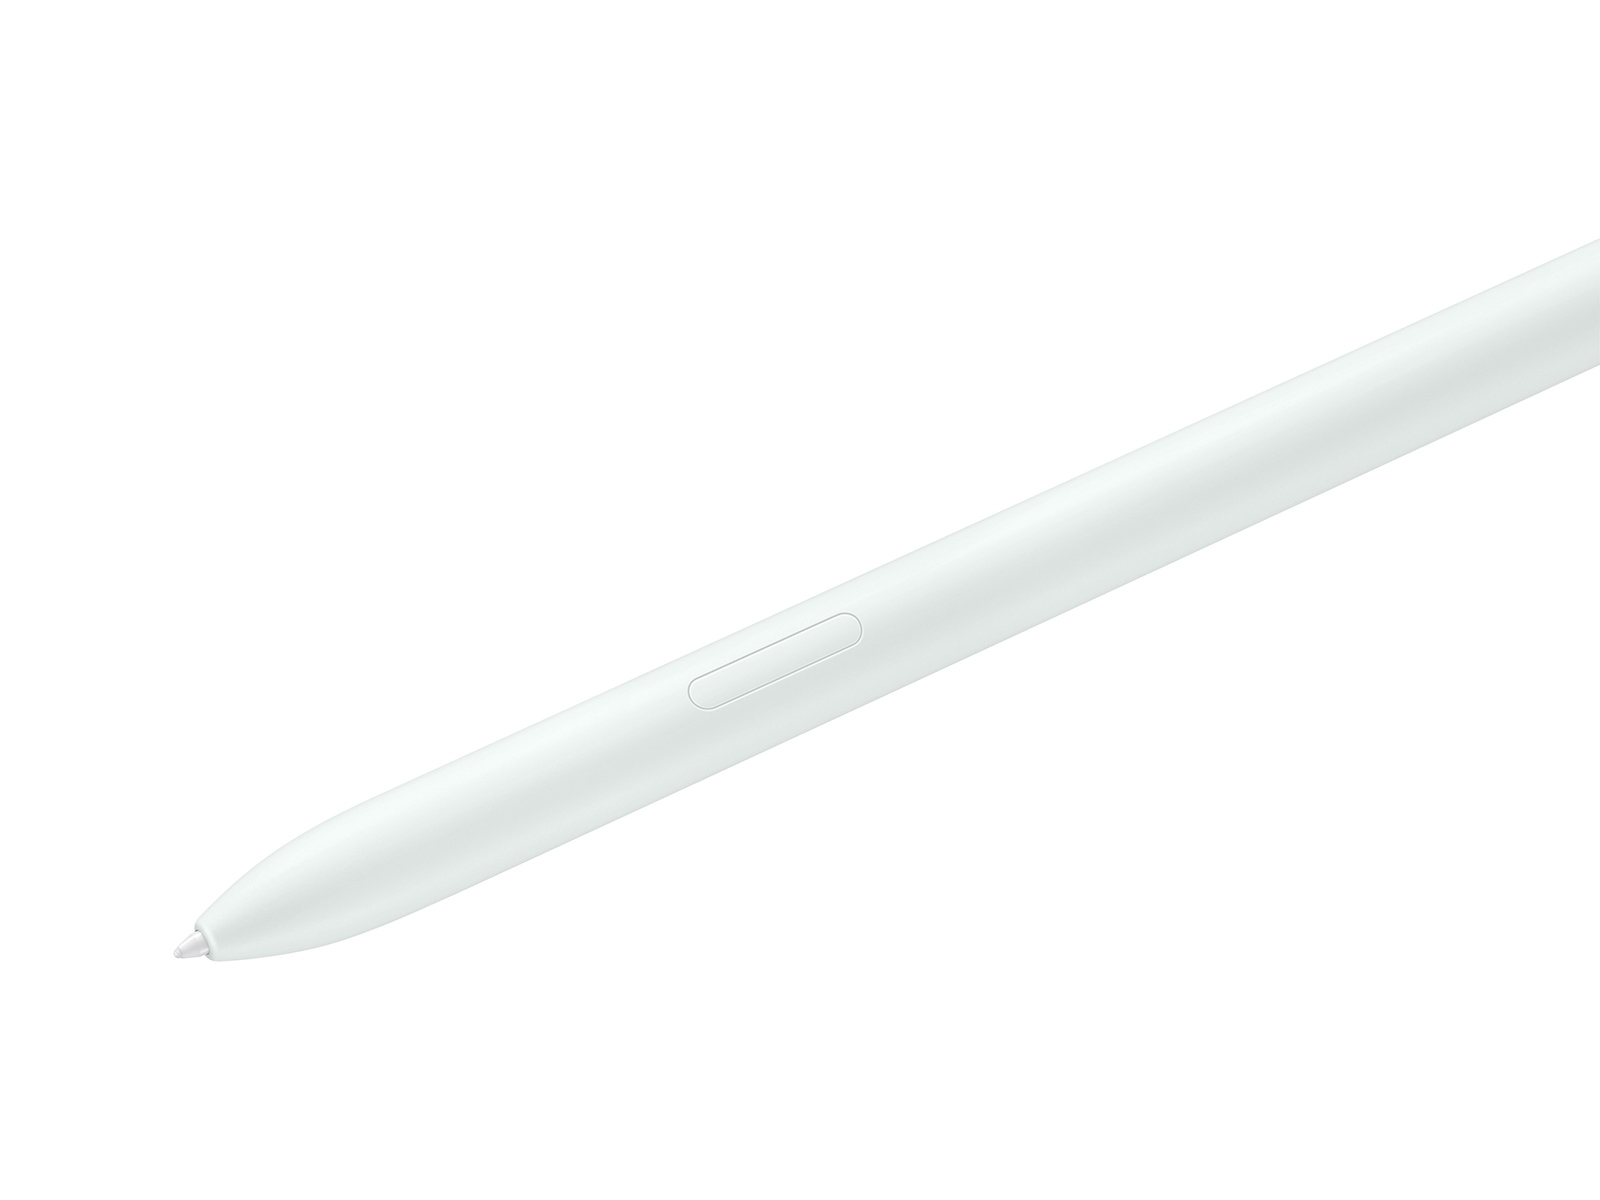 Thumbnail image of Galaxy Tab S9 FE/S9 FE+ S Pen, Mint